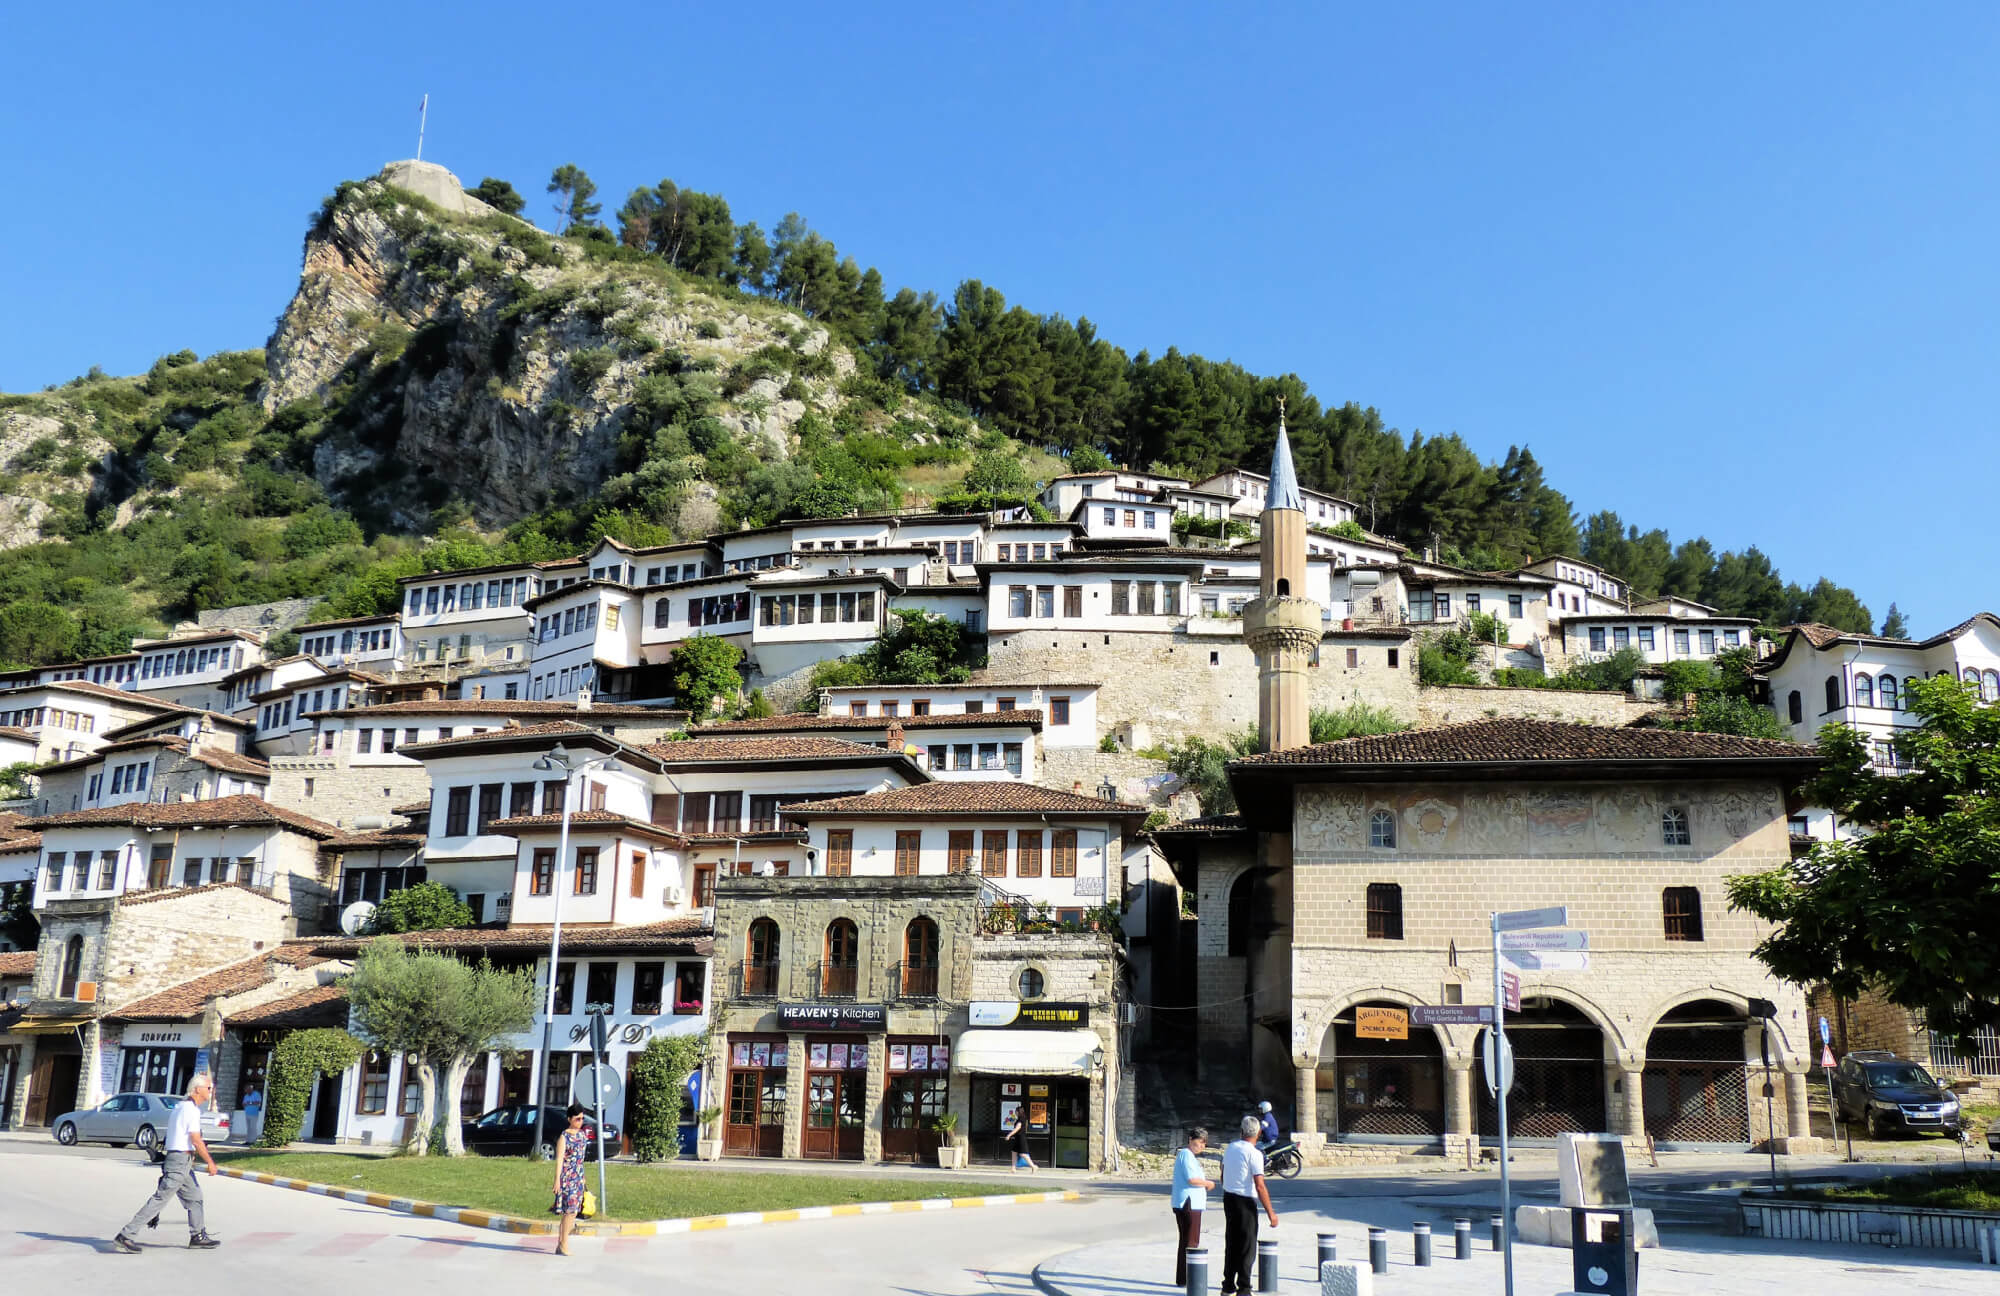 Berat, Albania